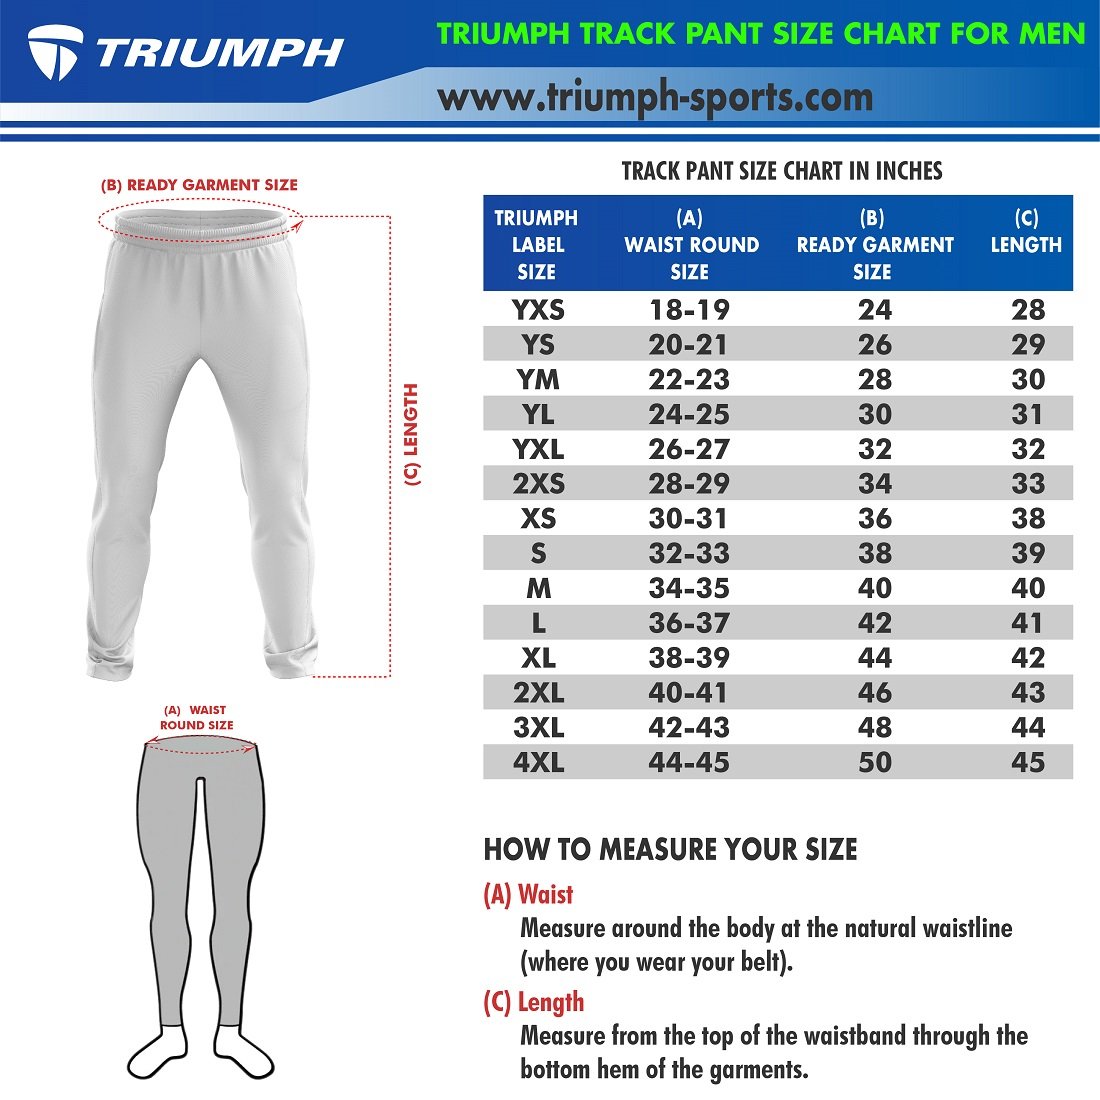 Men's Track Pants Size Chart